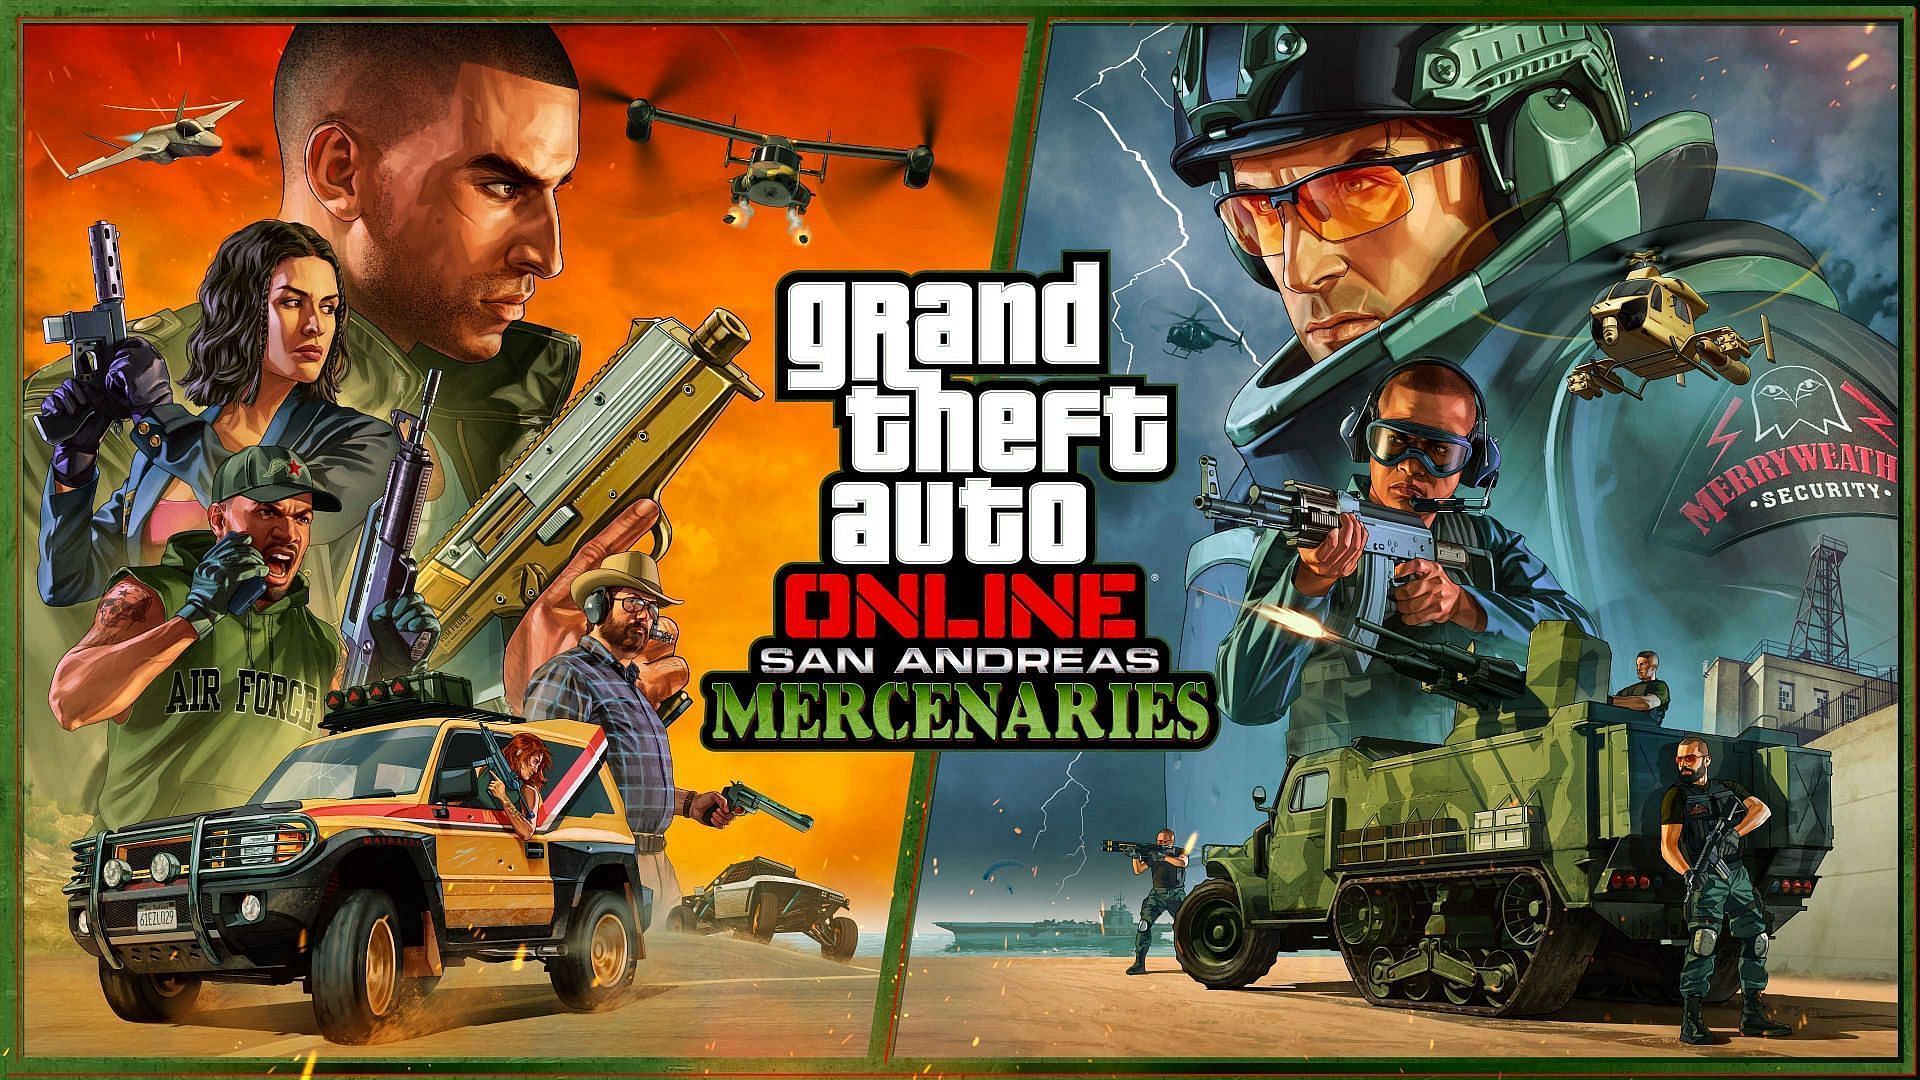 There are nine missions in GTA Online San Andreas Mercenaries (Image via Rockstar Games)